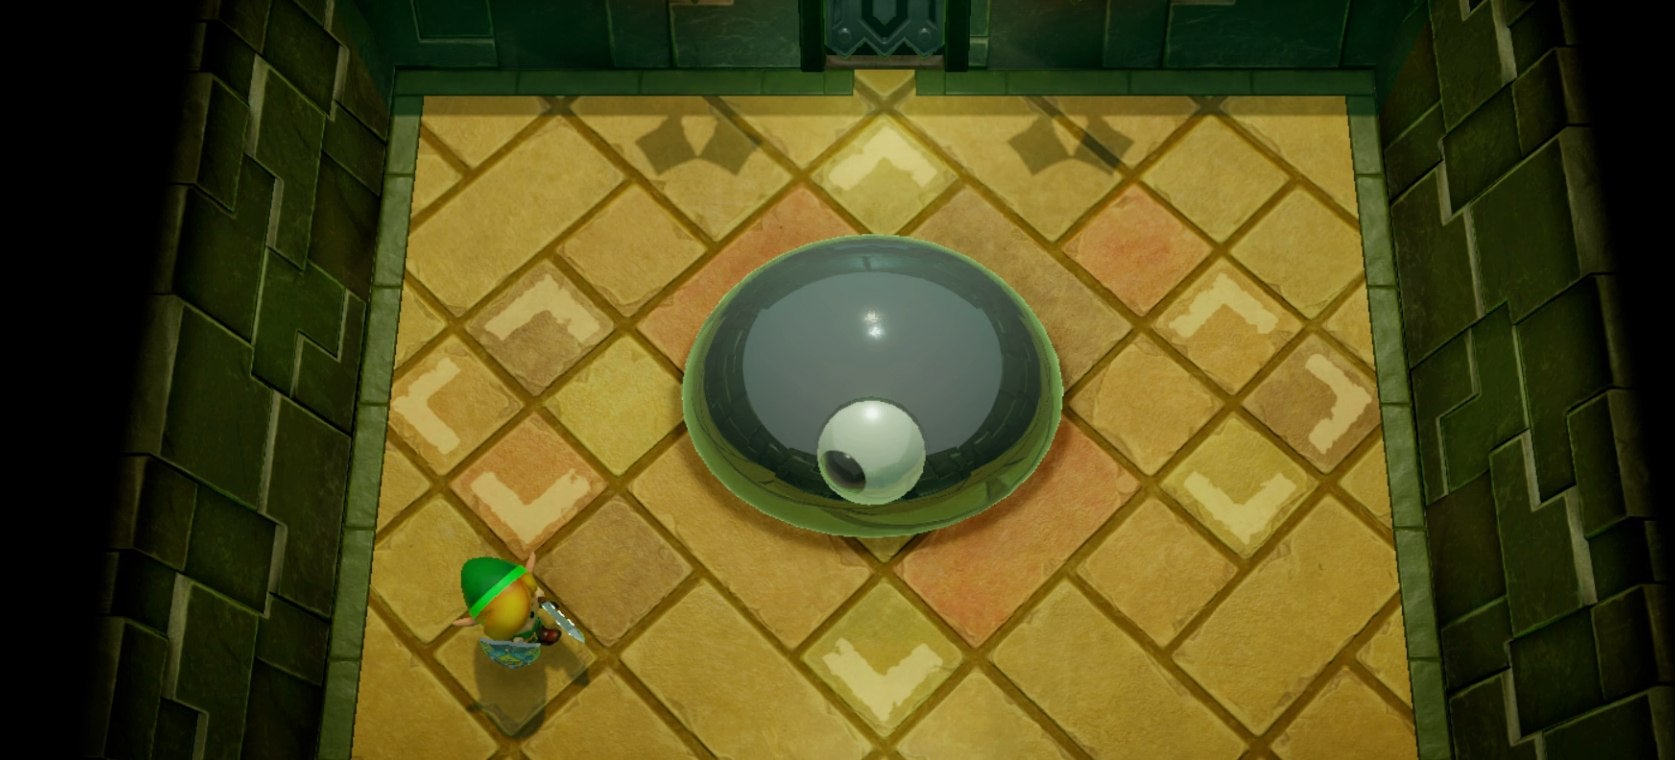 Image for Zelda Link's Awakening Key Dungeon Walkthrough - How to Beat the Key Dungeon